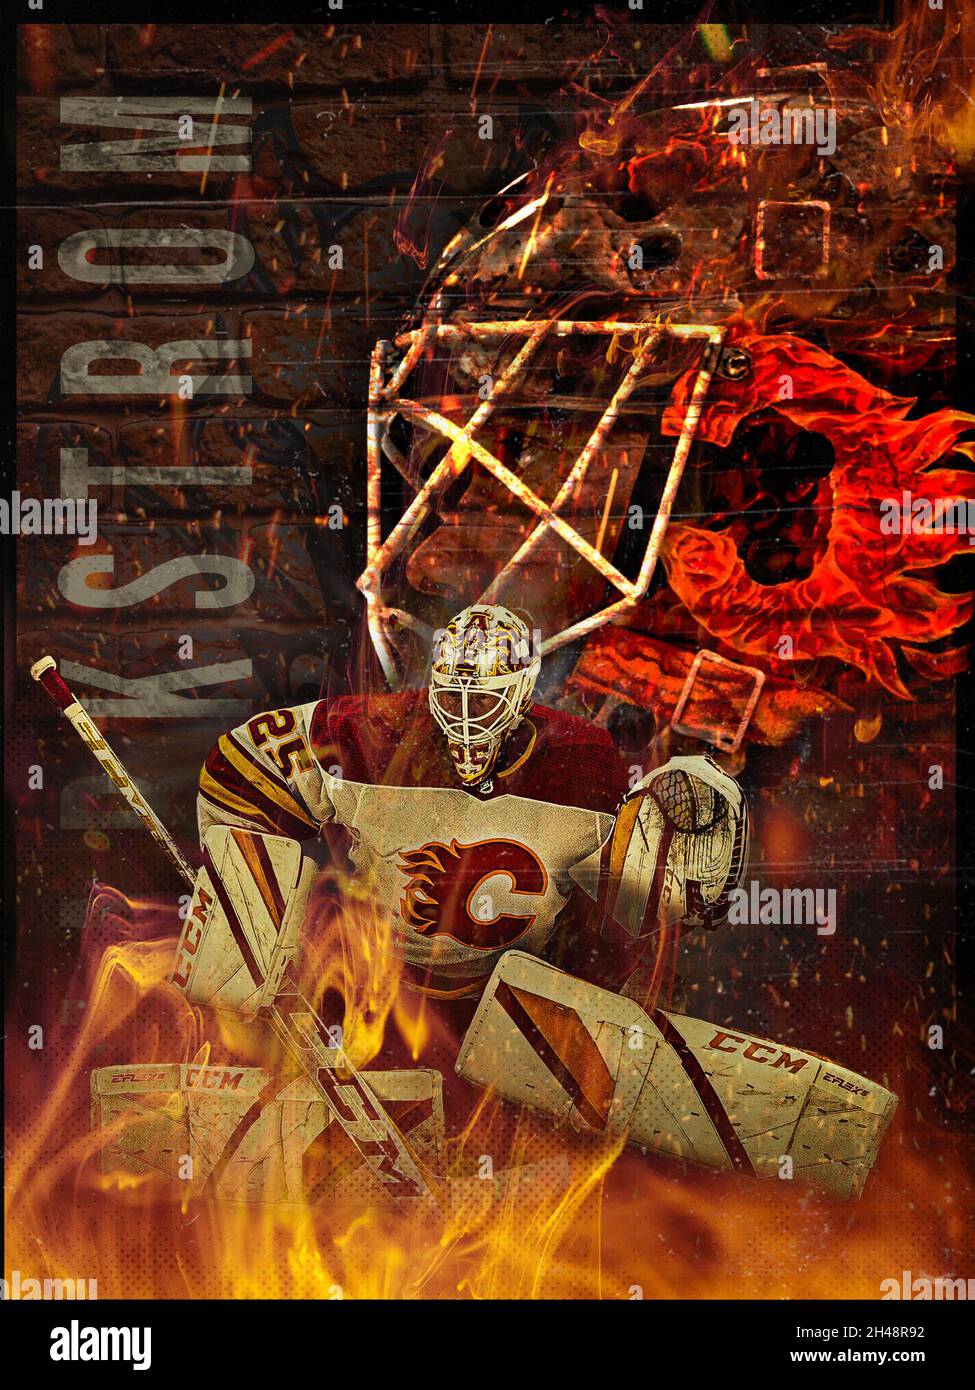 Jacob Markstrom, Calgary Flames Foto Stock